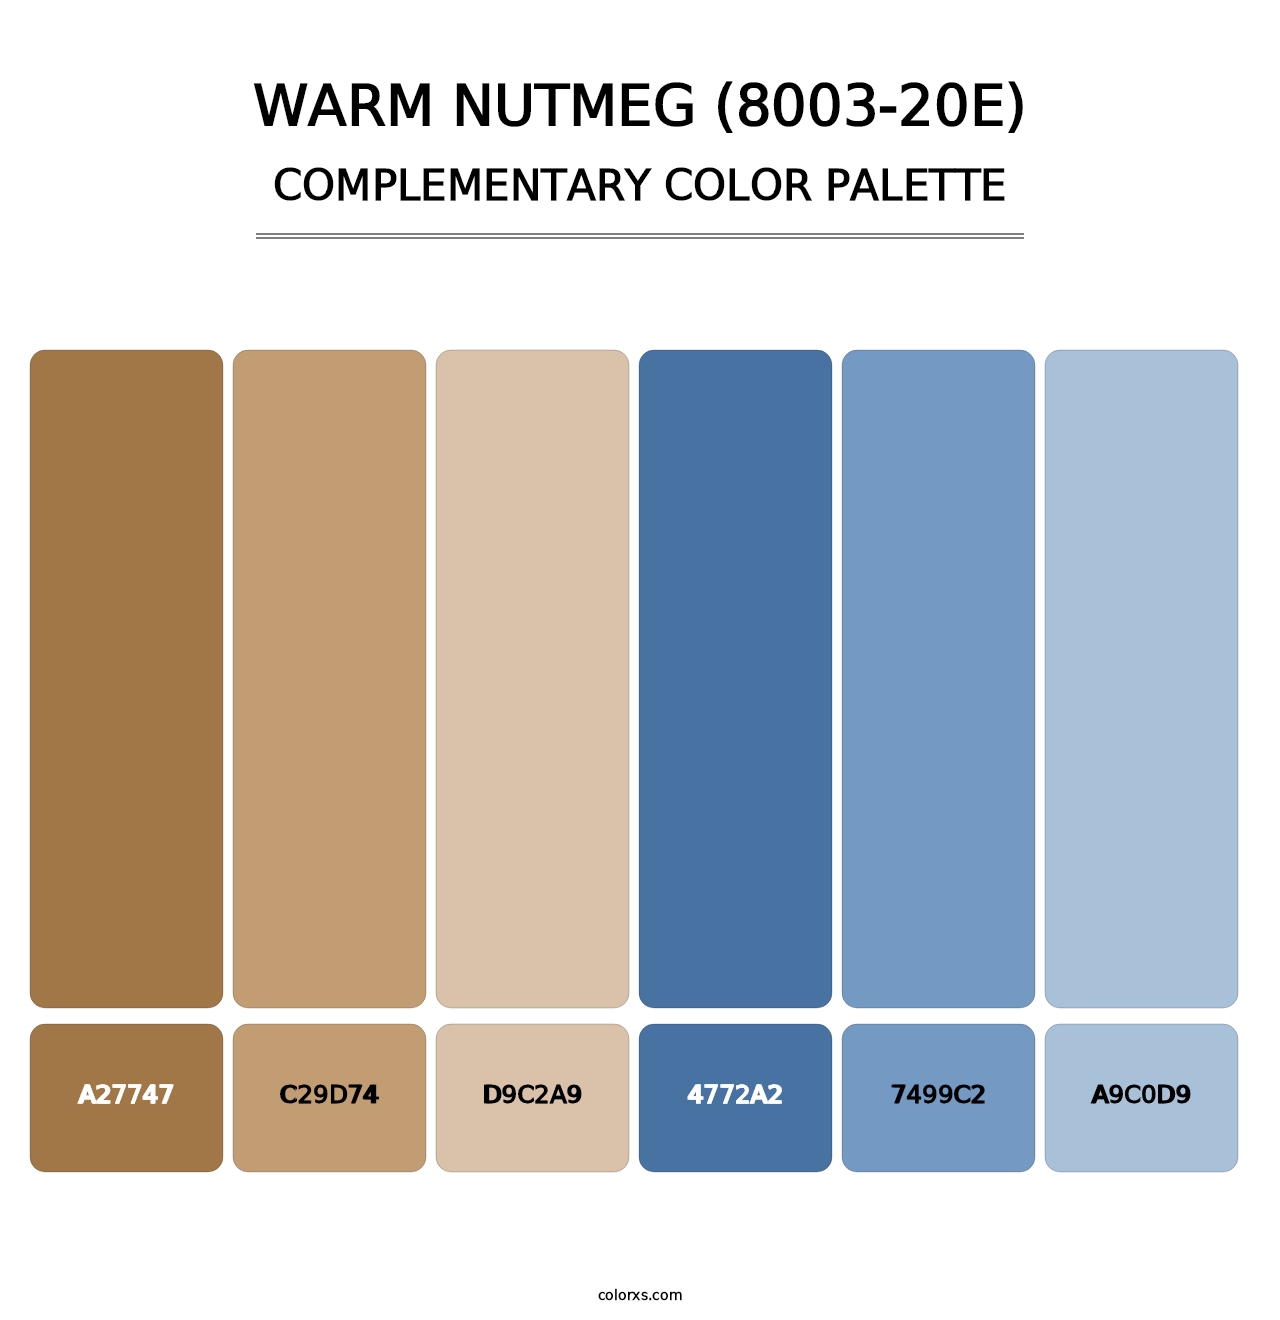 Warm Nutmeg (8003-20E) - Complementary Color Palette